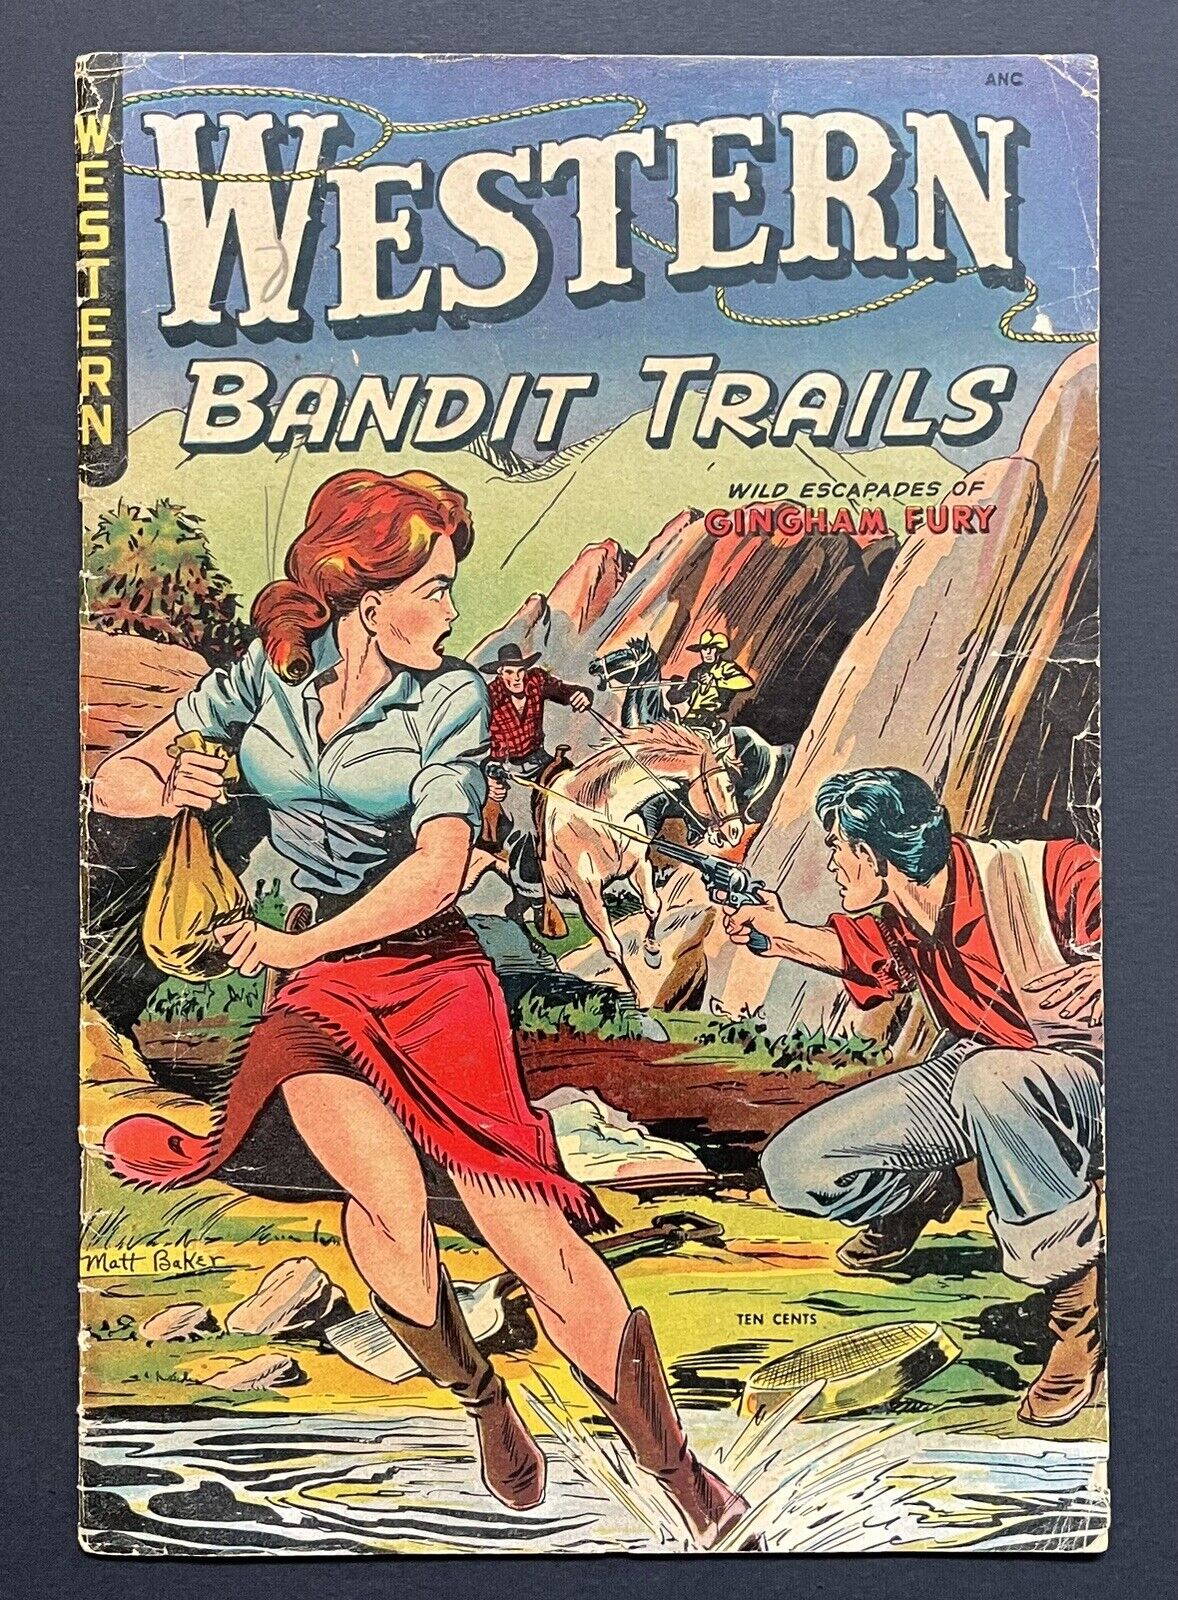 WESTERN BANDIT TRAILS #3 (St. John, 1949) Matt Baker Cover Art, Golden Age